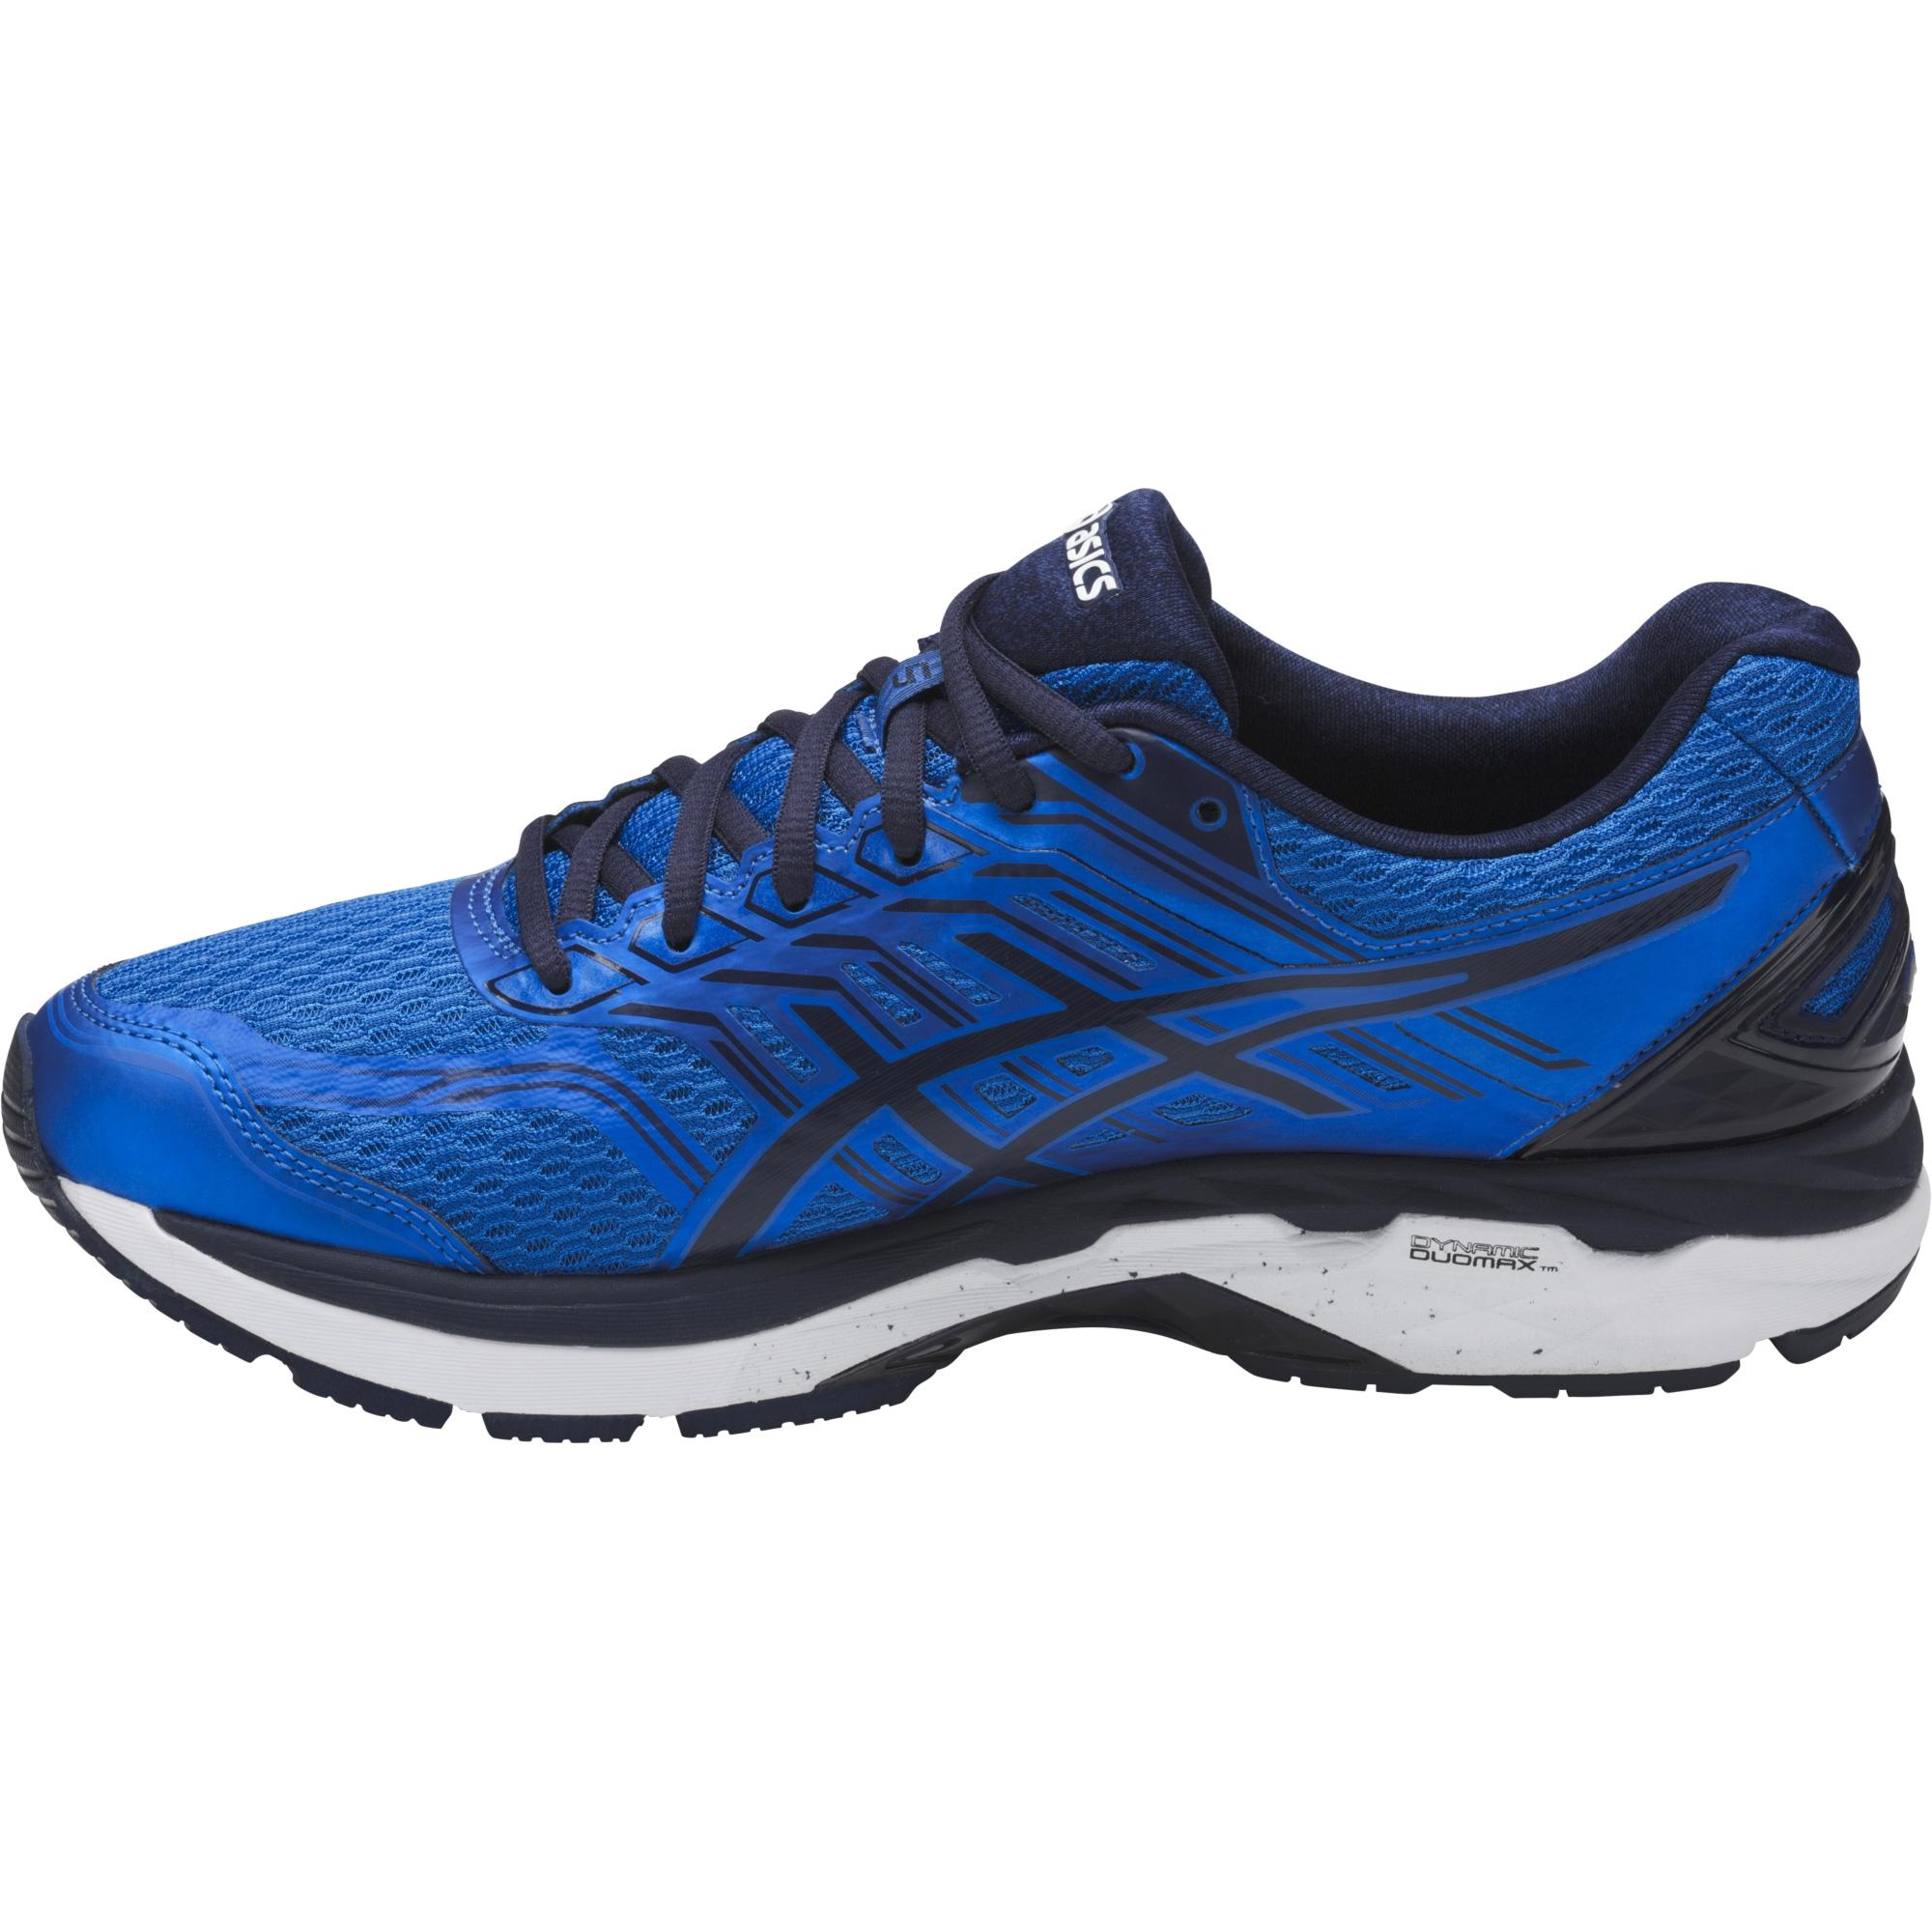 Asics Mens GT-2000 5 Running Shoes - Directoire Blue - Tennisnuts.com